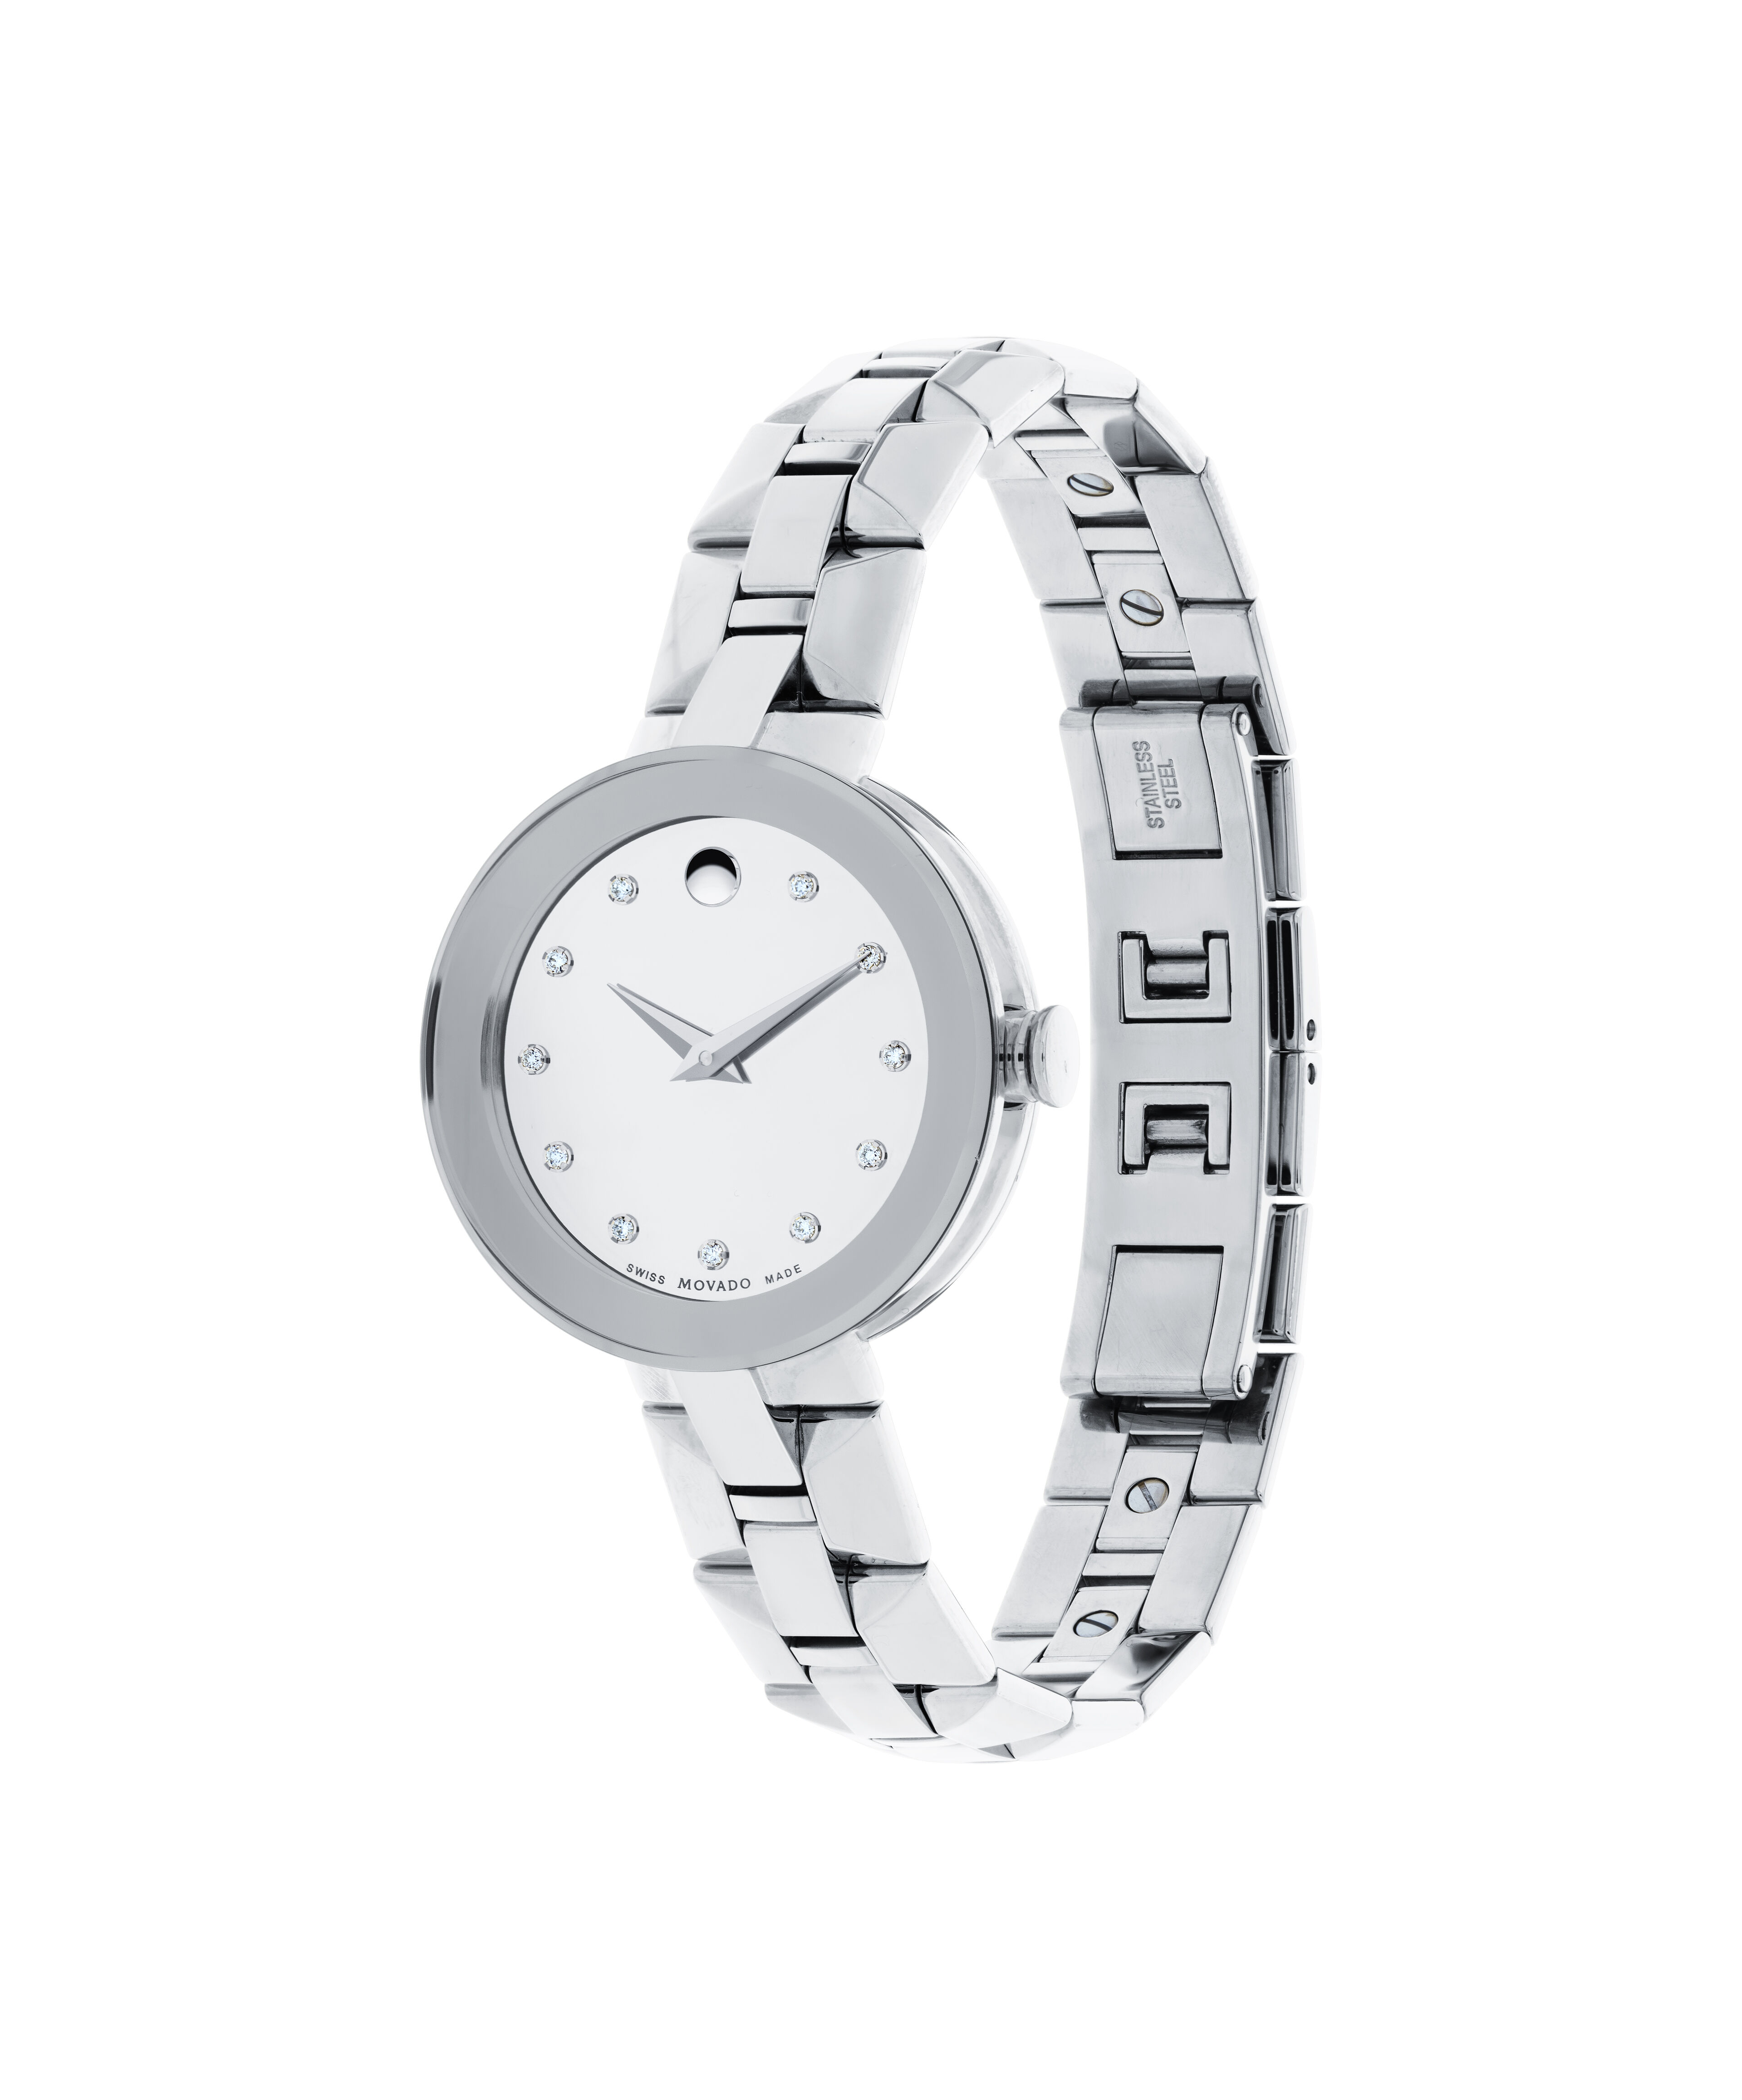 Tiffany Replika Watches